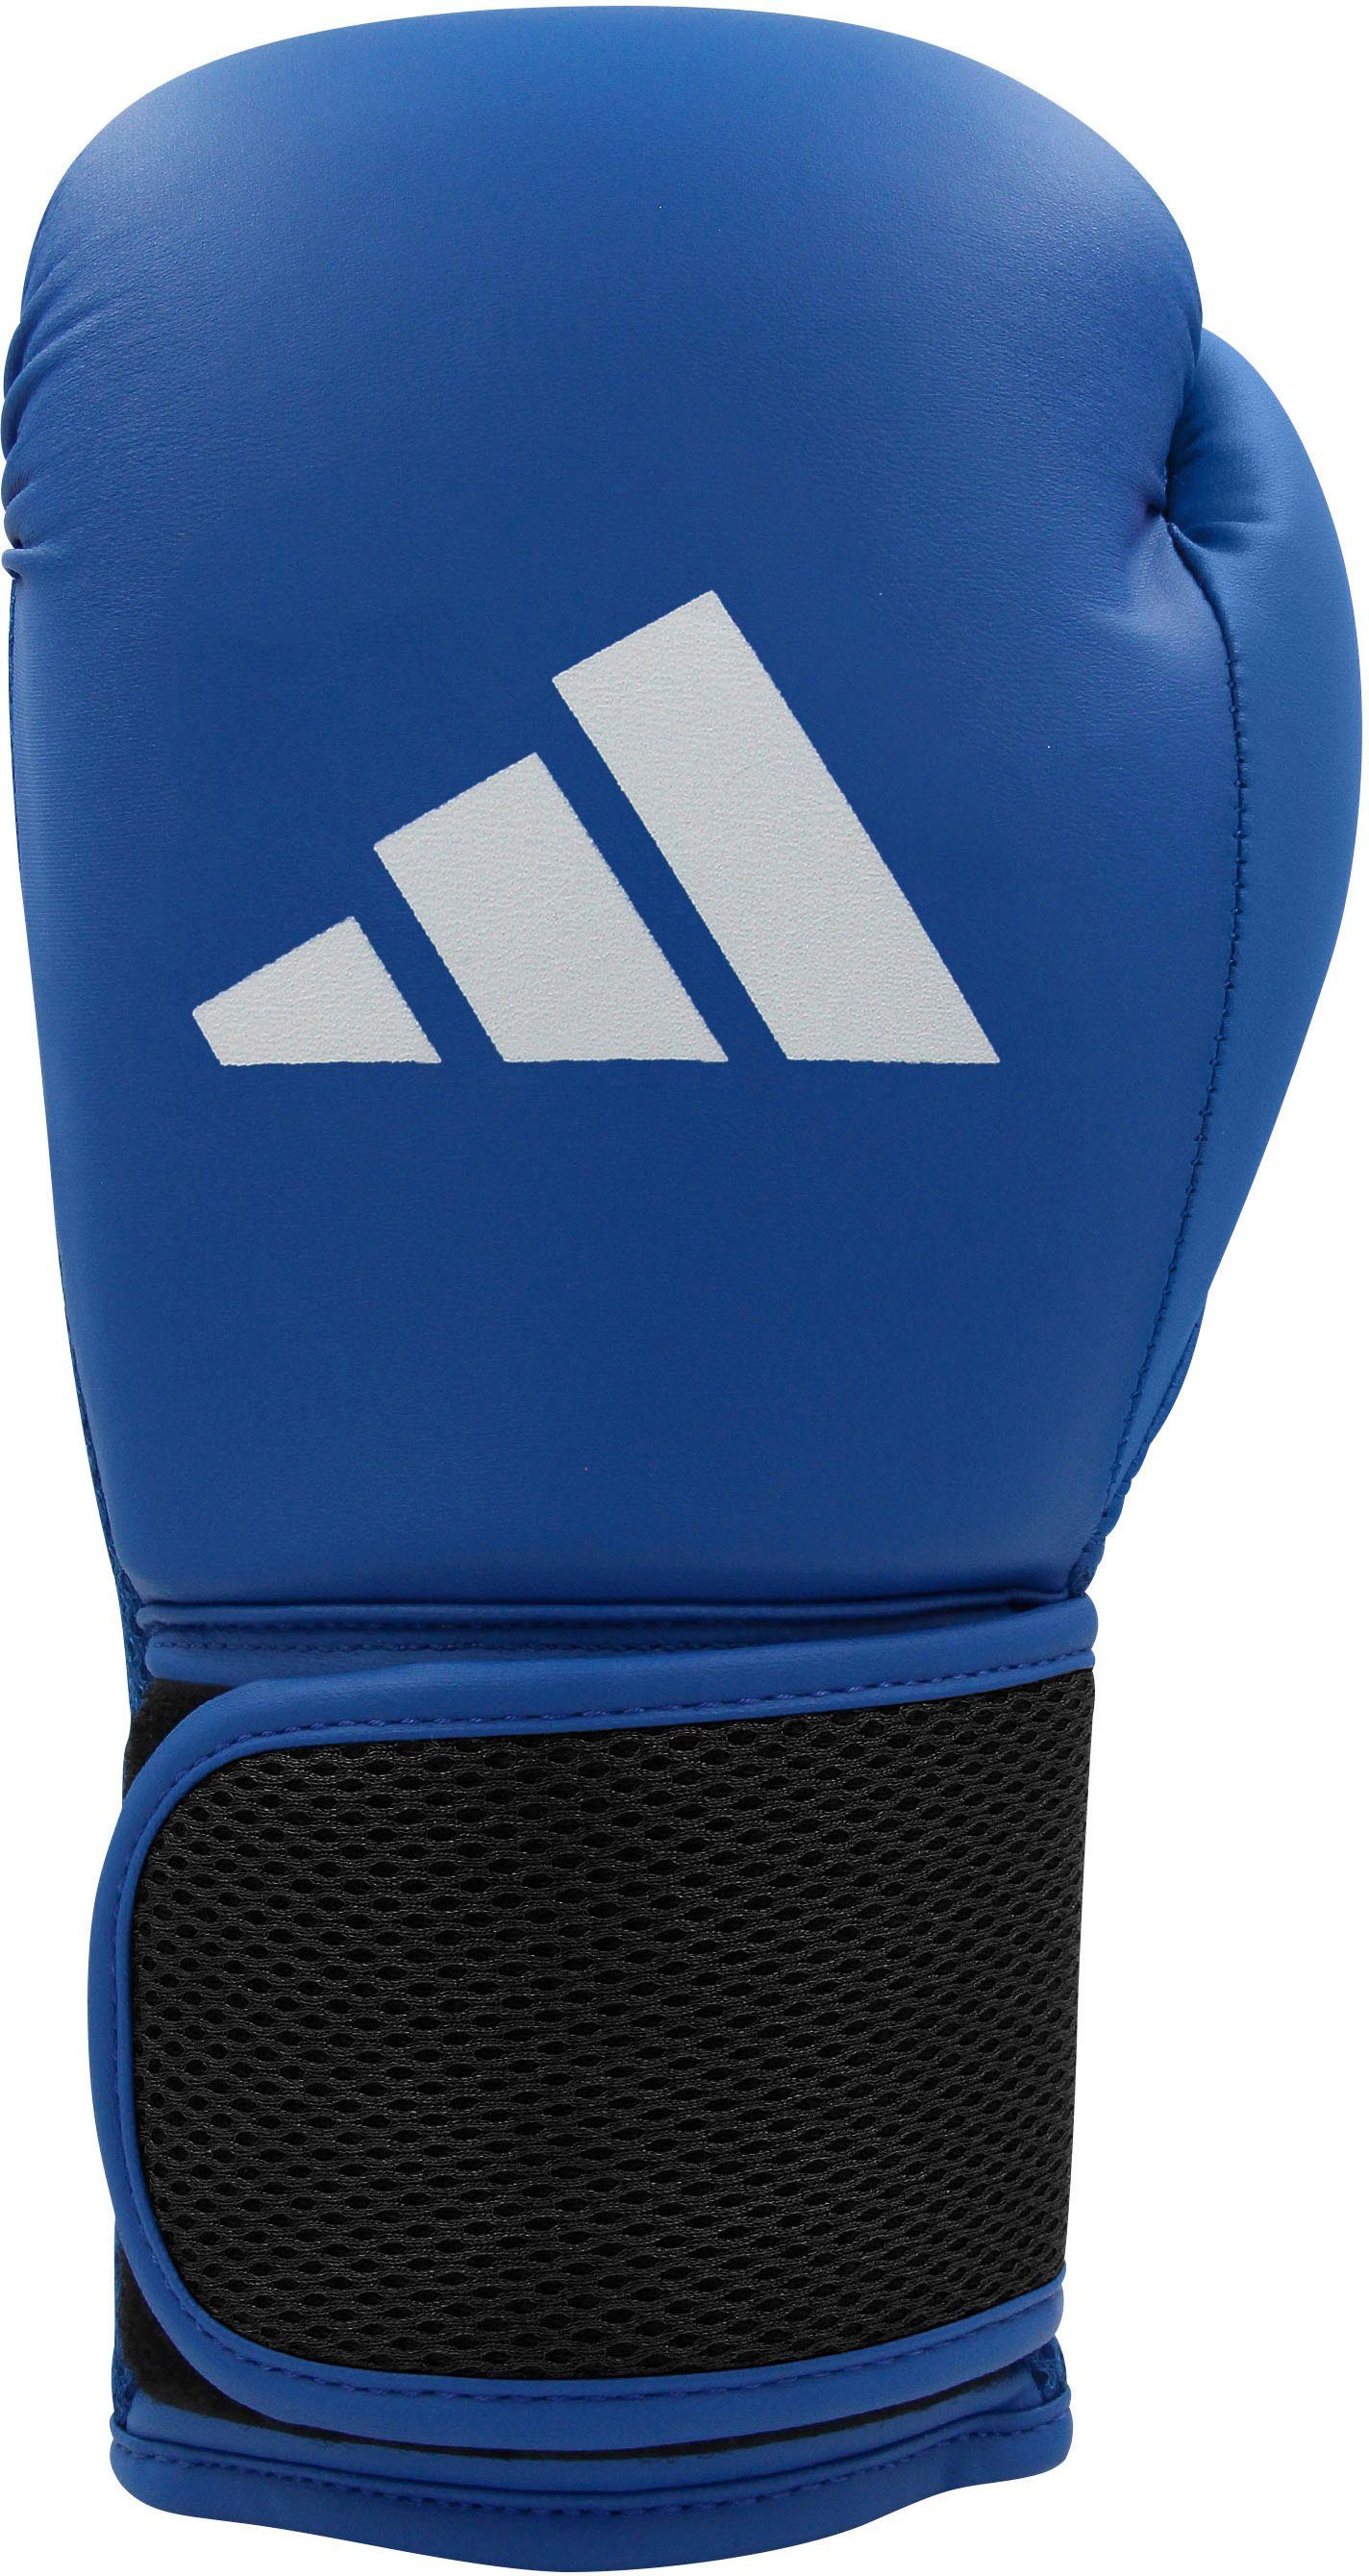 Boxhandschuhe Performance adidas blau